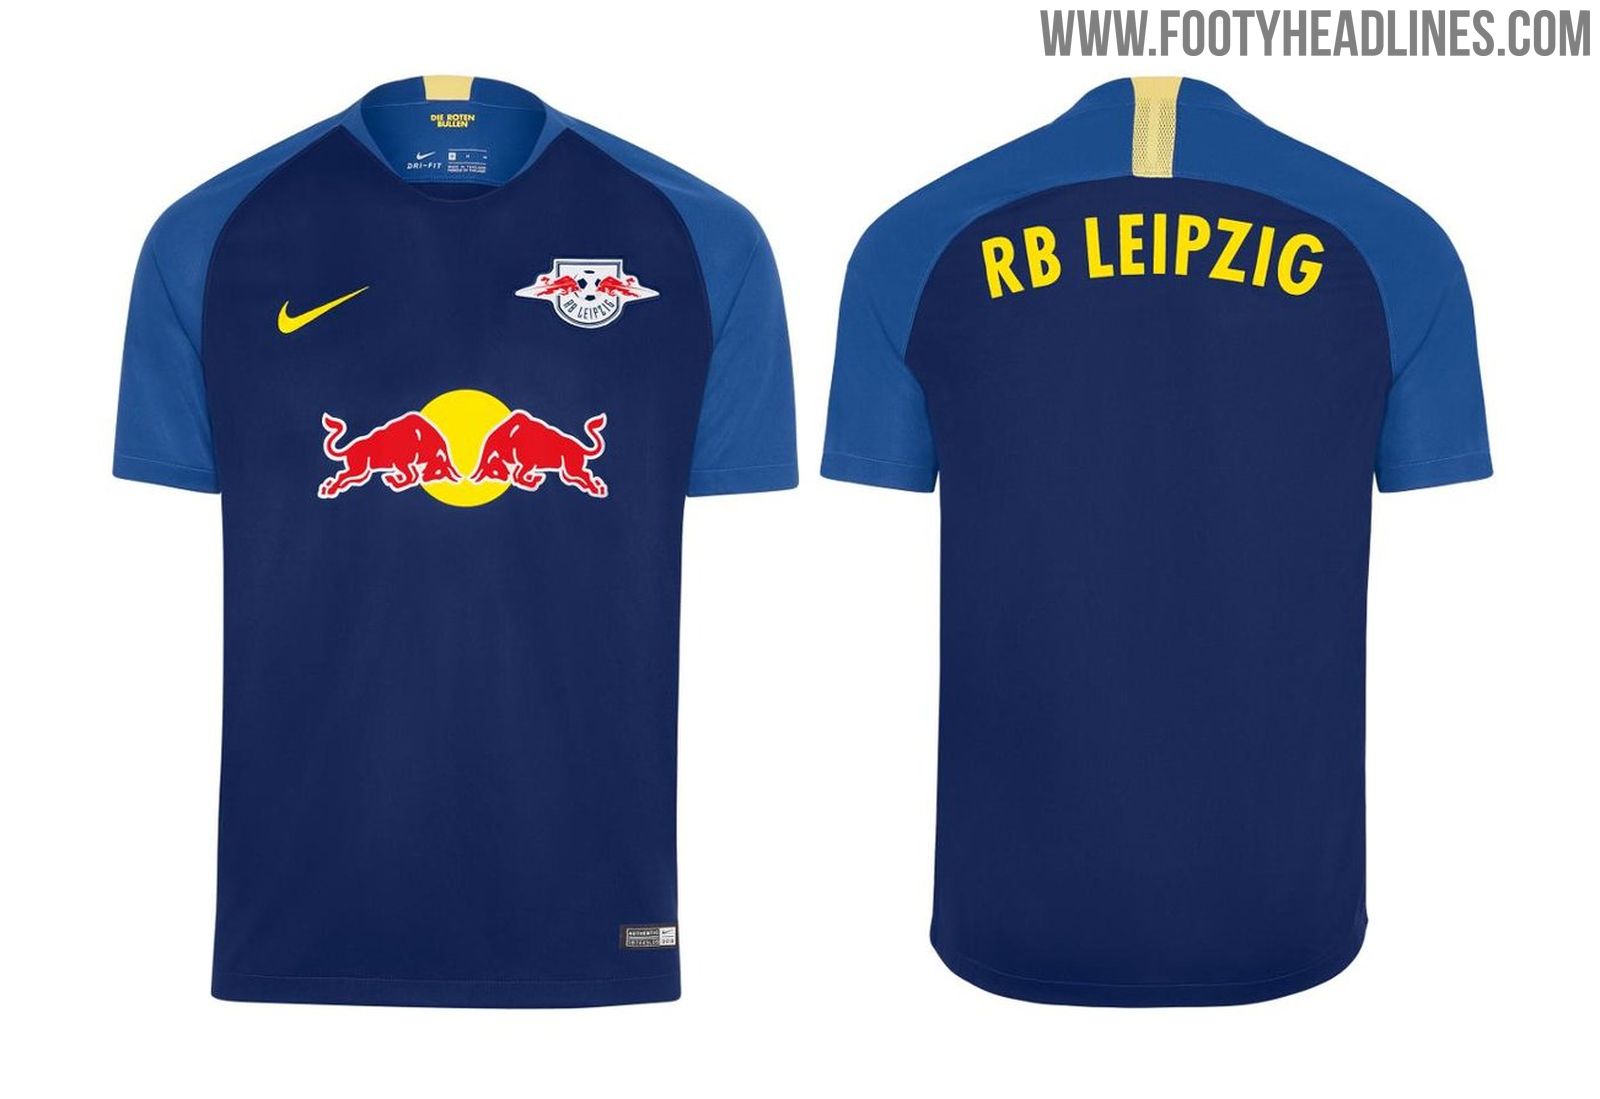 RB Leipzig 21-22 Away Kit Revealed - Footy Headlines